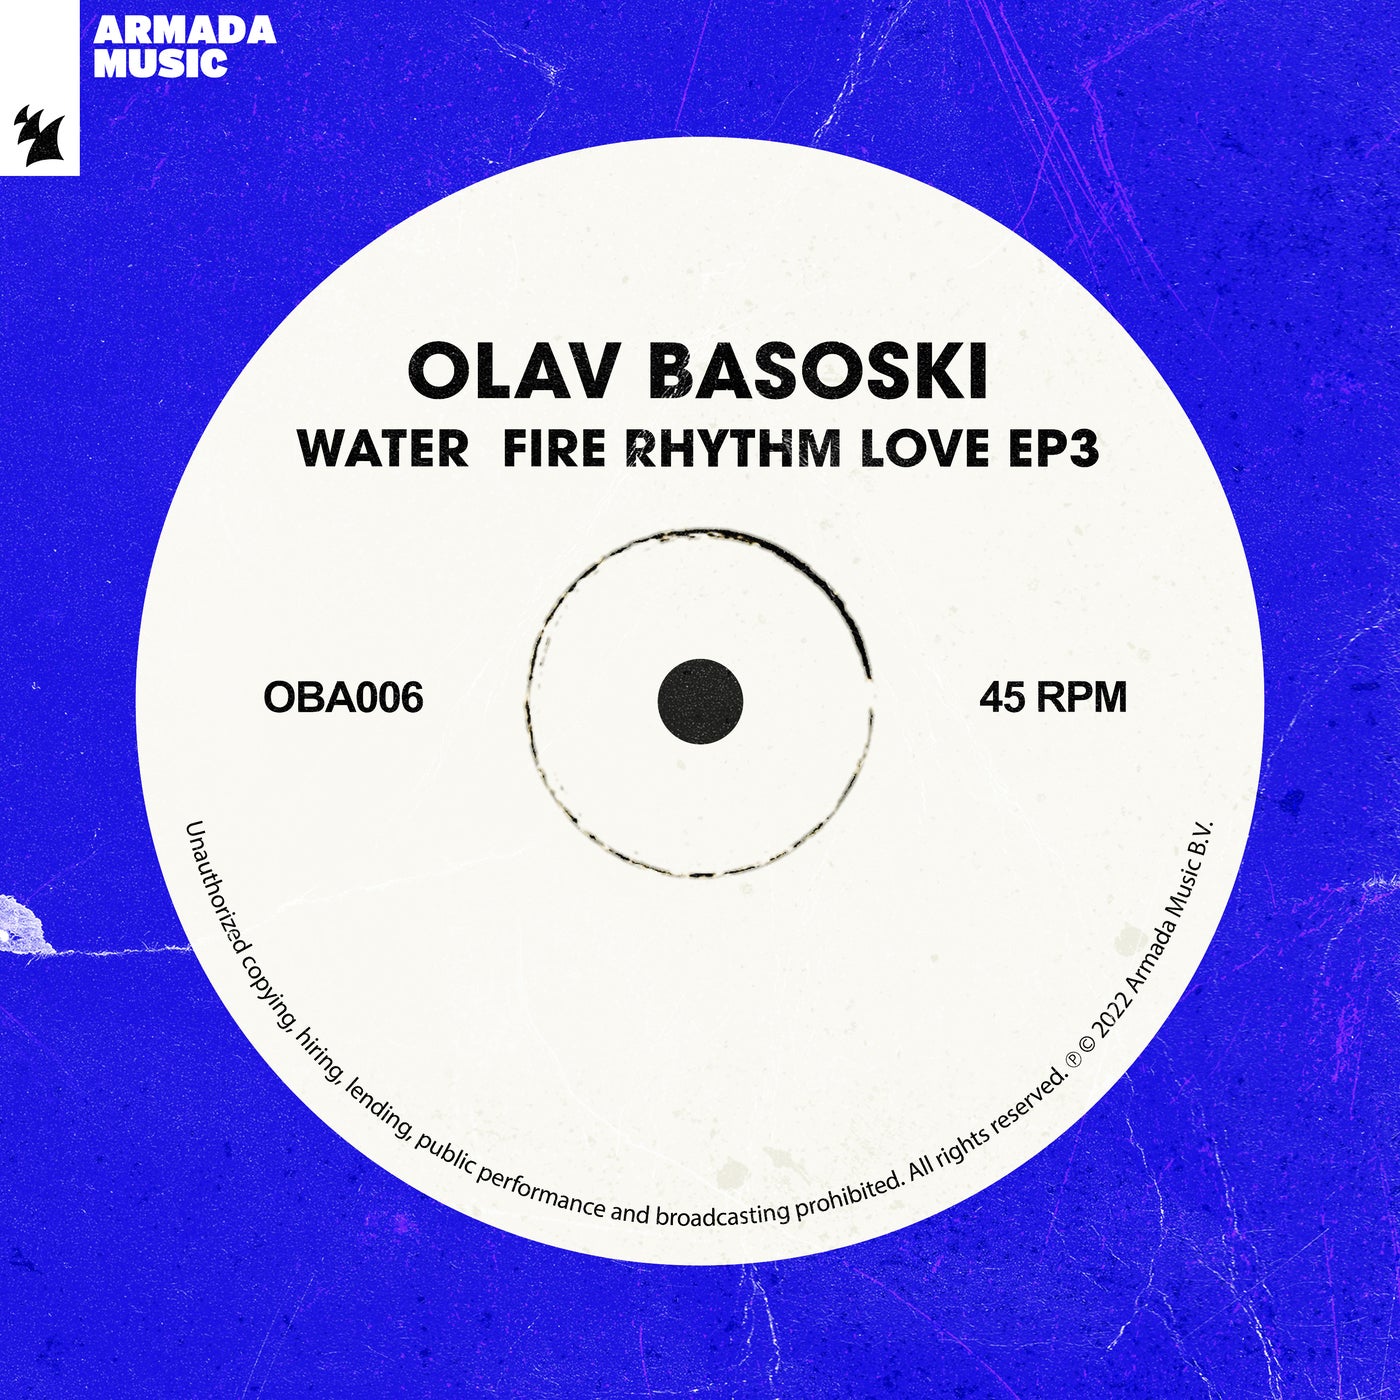 Water Fire Rhythm Love EP3